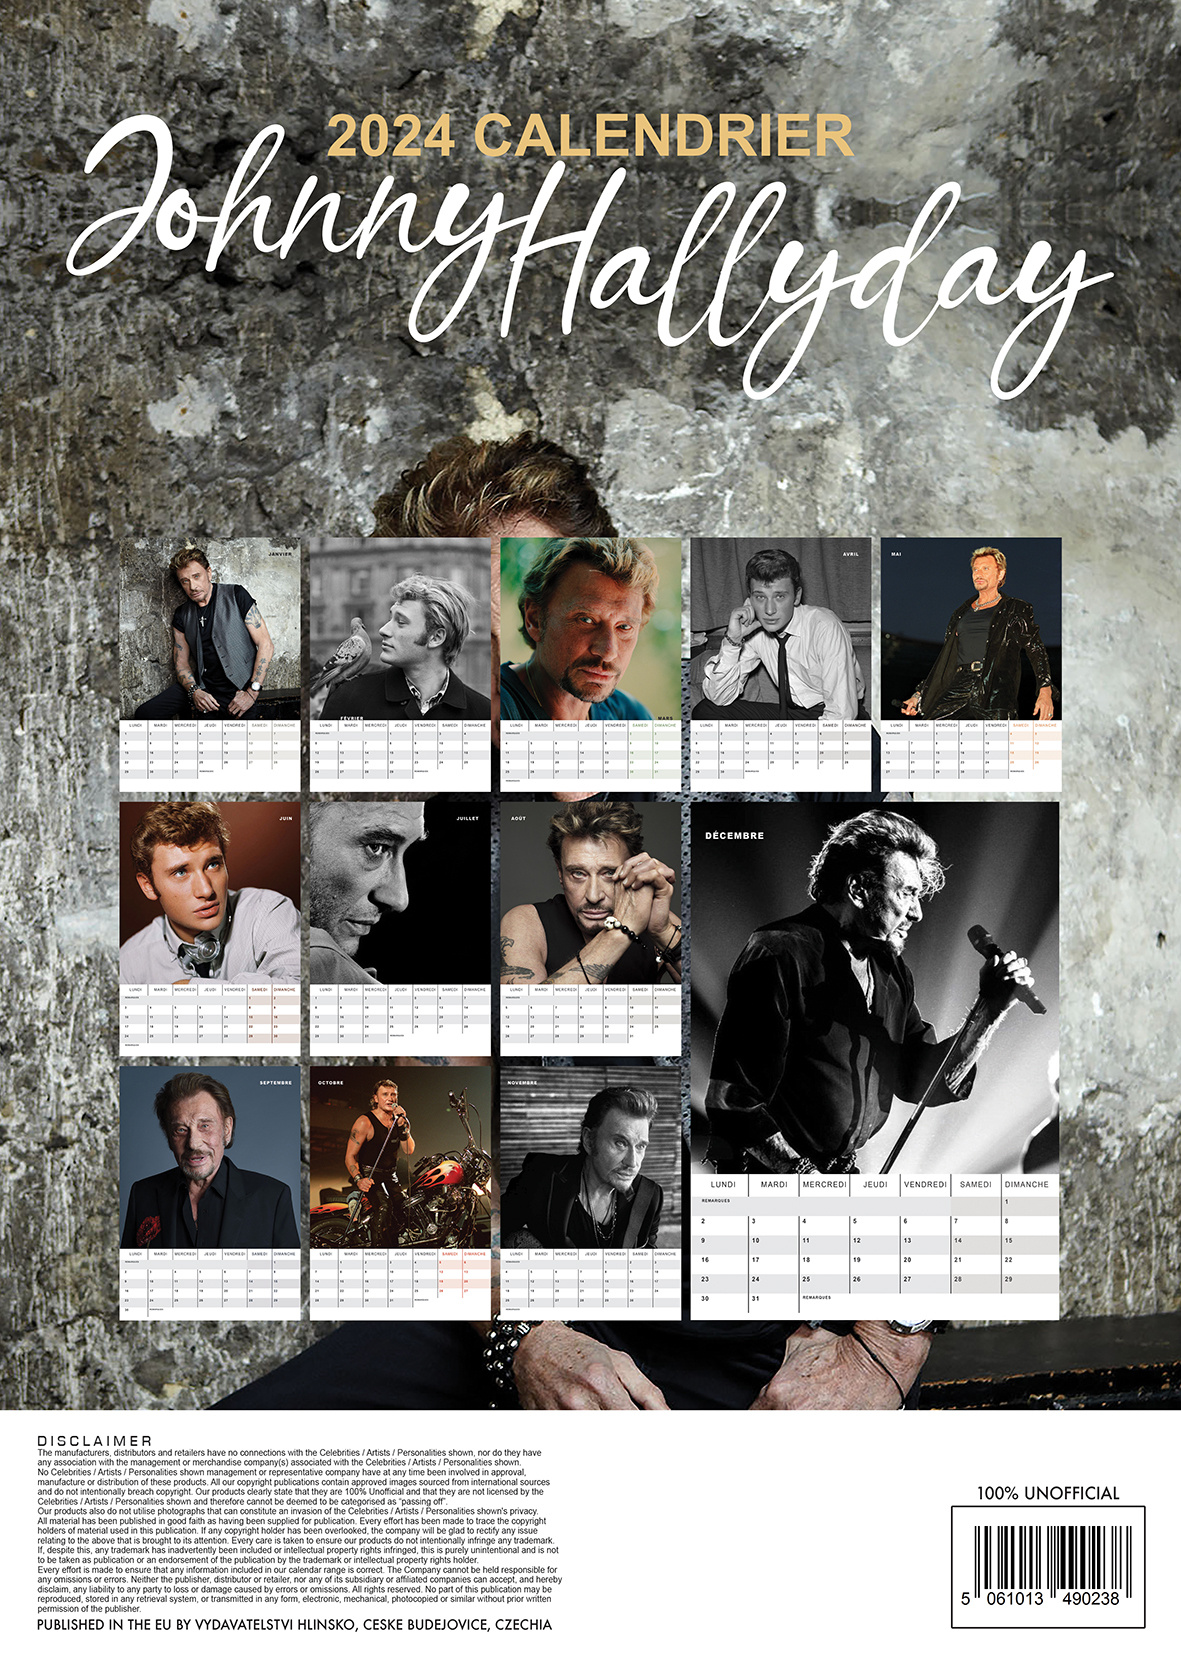 Buy Johnny Hallyday Calendar 2024 Order online easily Kalenderwinkel.nl